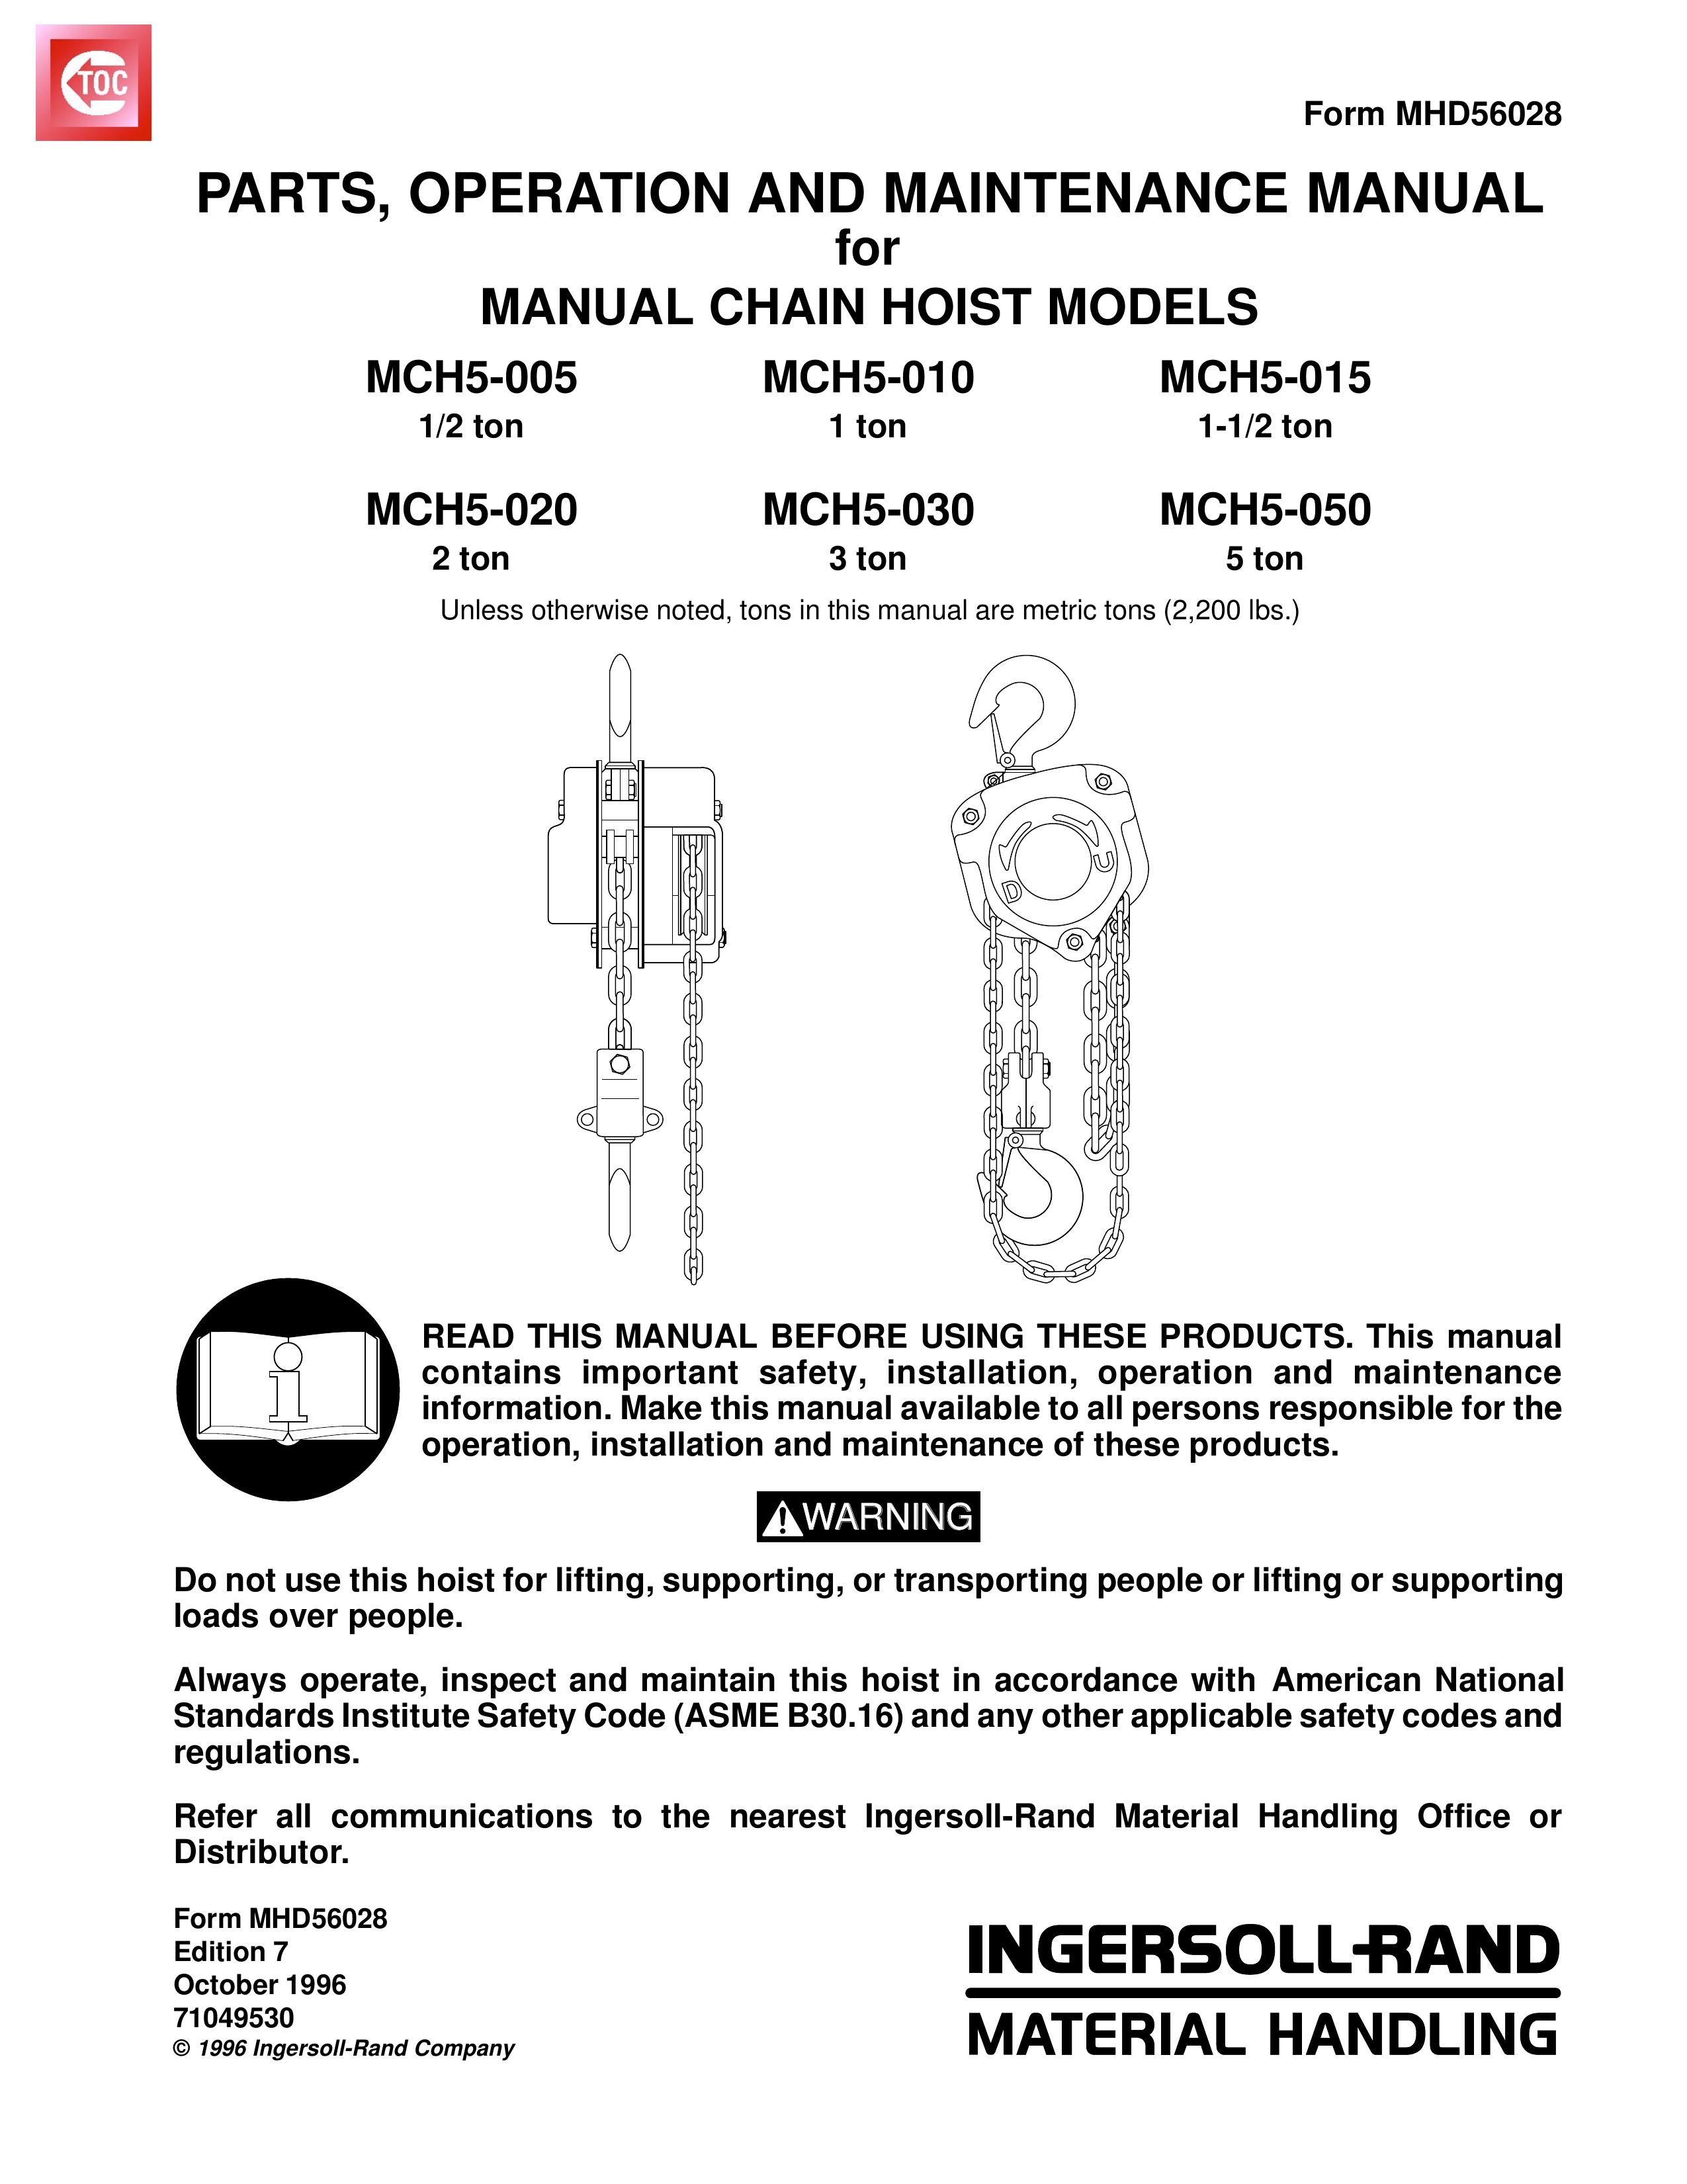 Ingersoll-Rand MCH5-020 Digital Photo Keychain User Manual